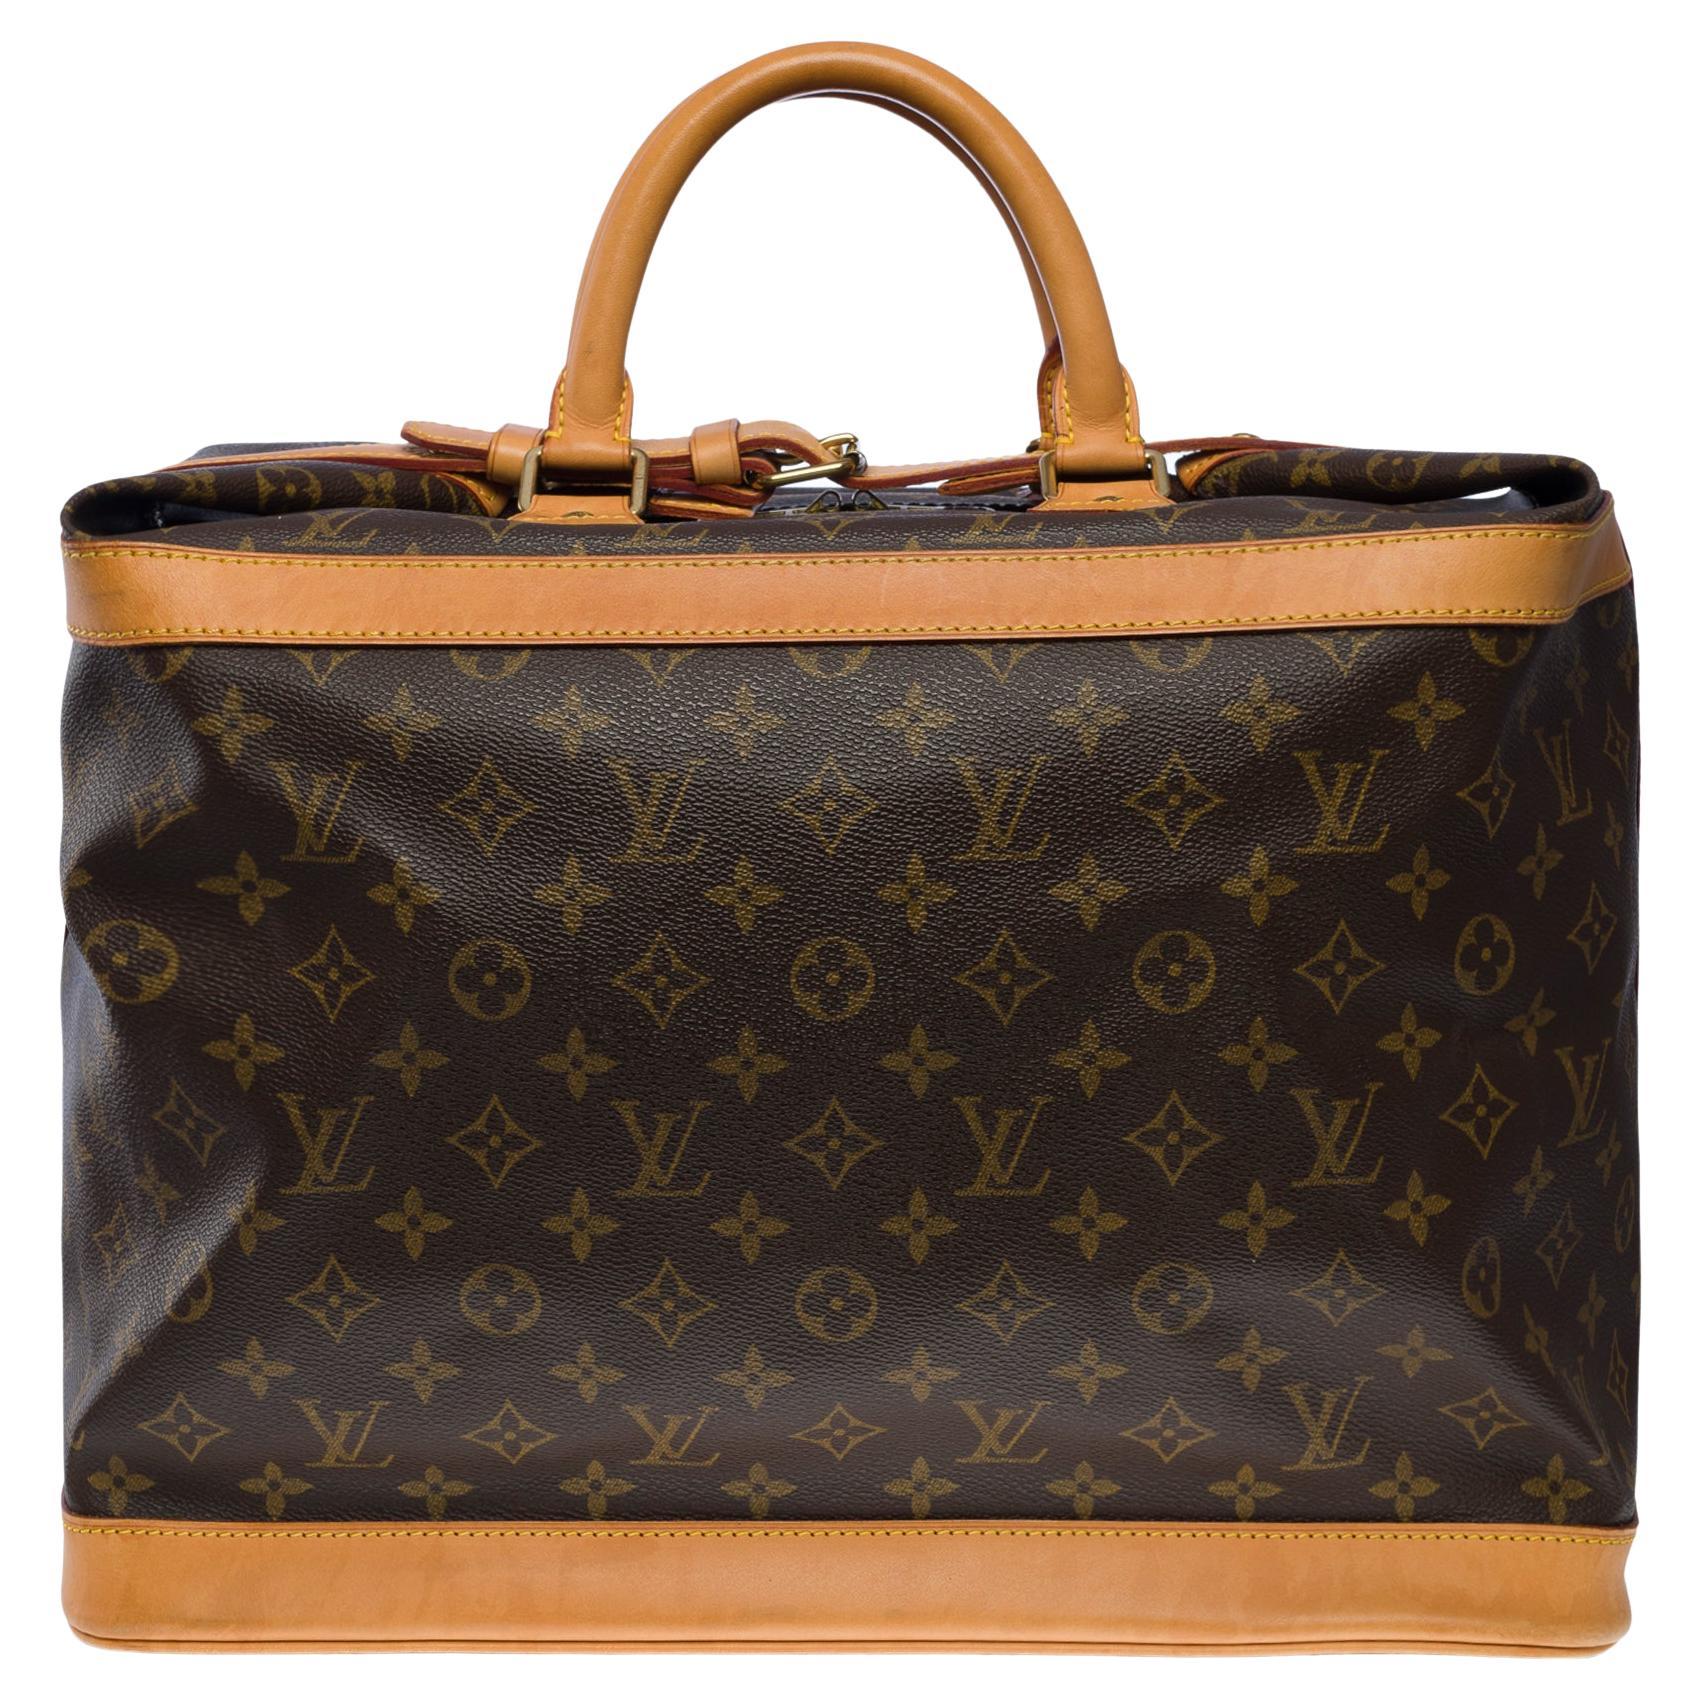 Louis Vuitton Rare Bag - 130 For Sale on 1stDibs | rare vintage 